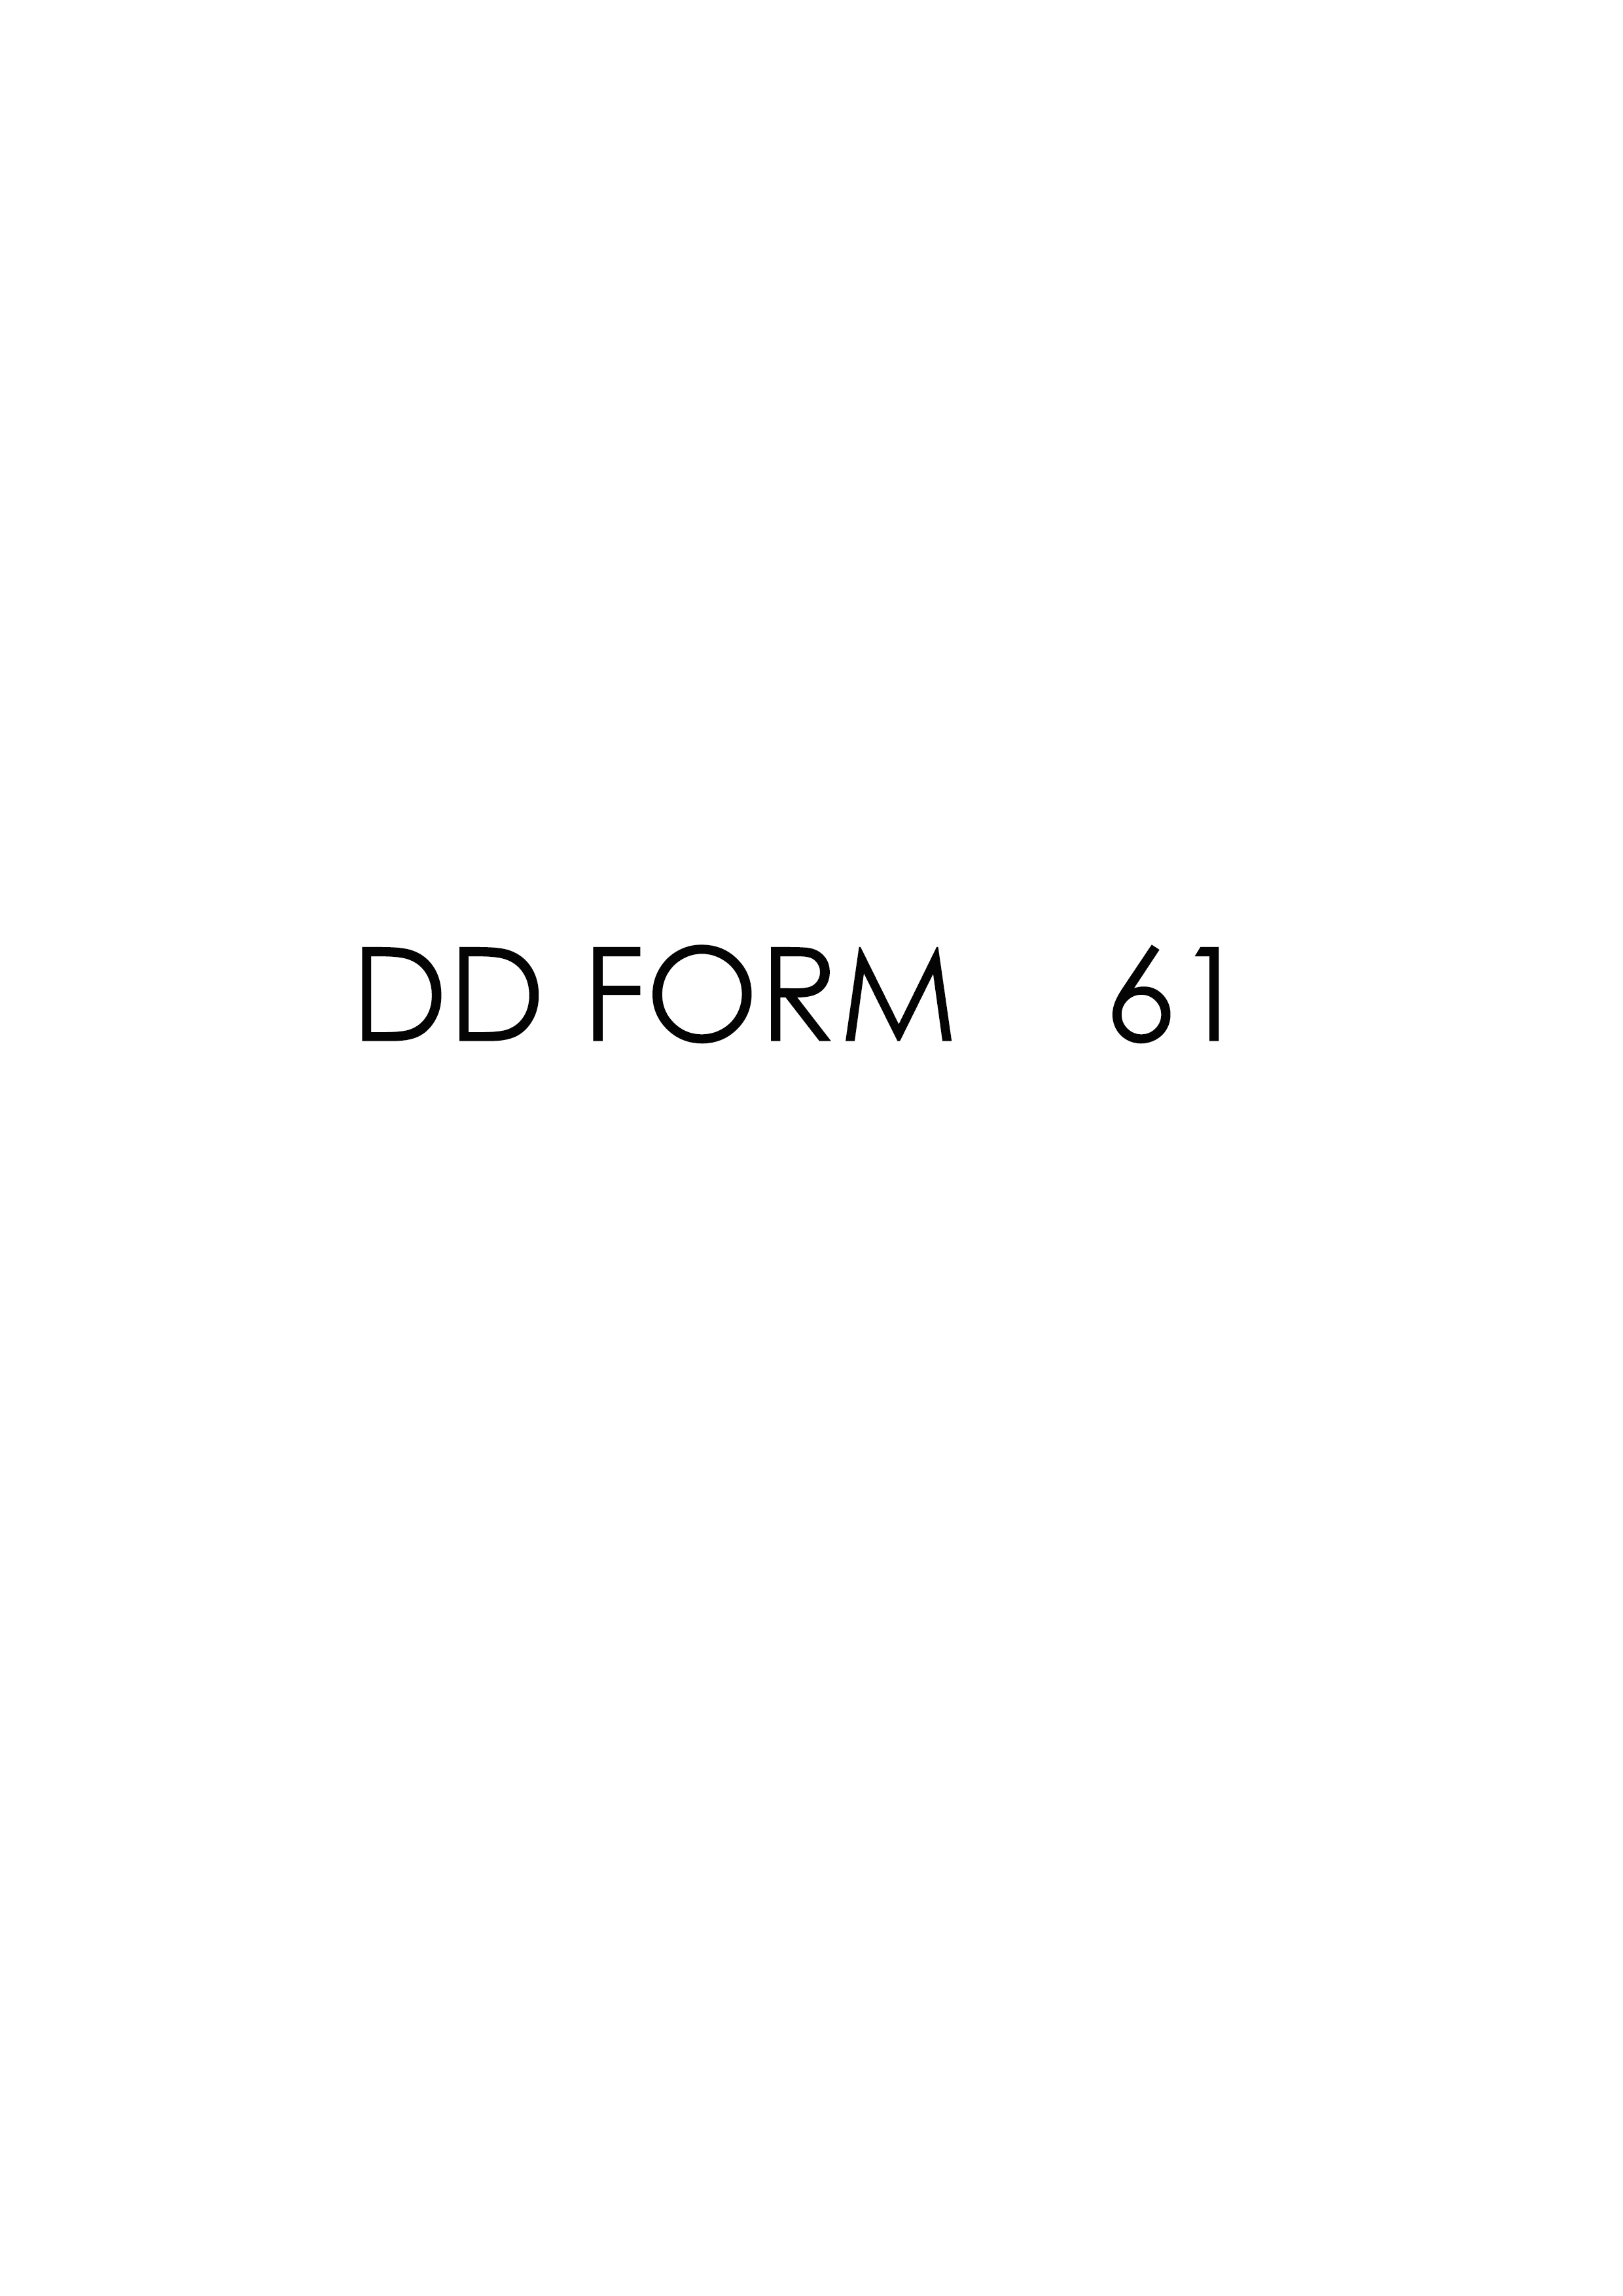 Download dd form 61